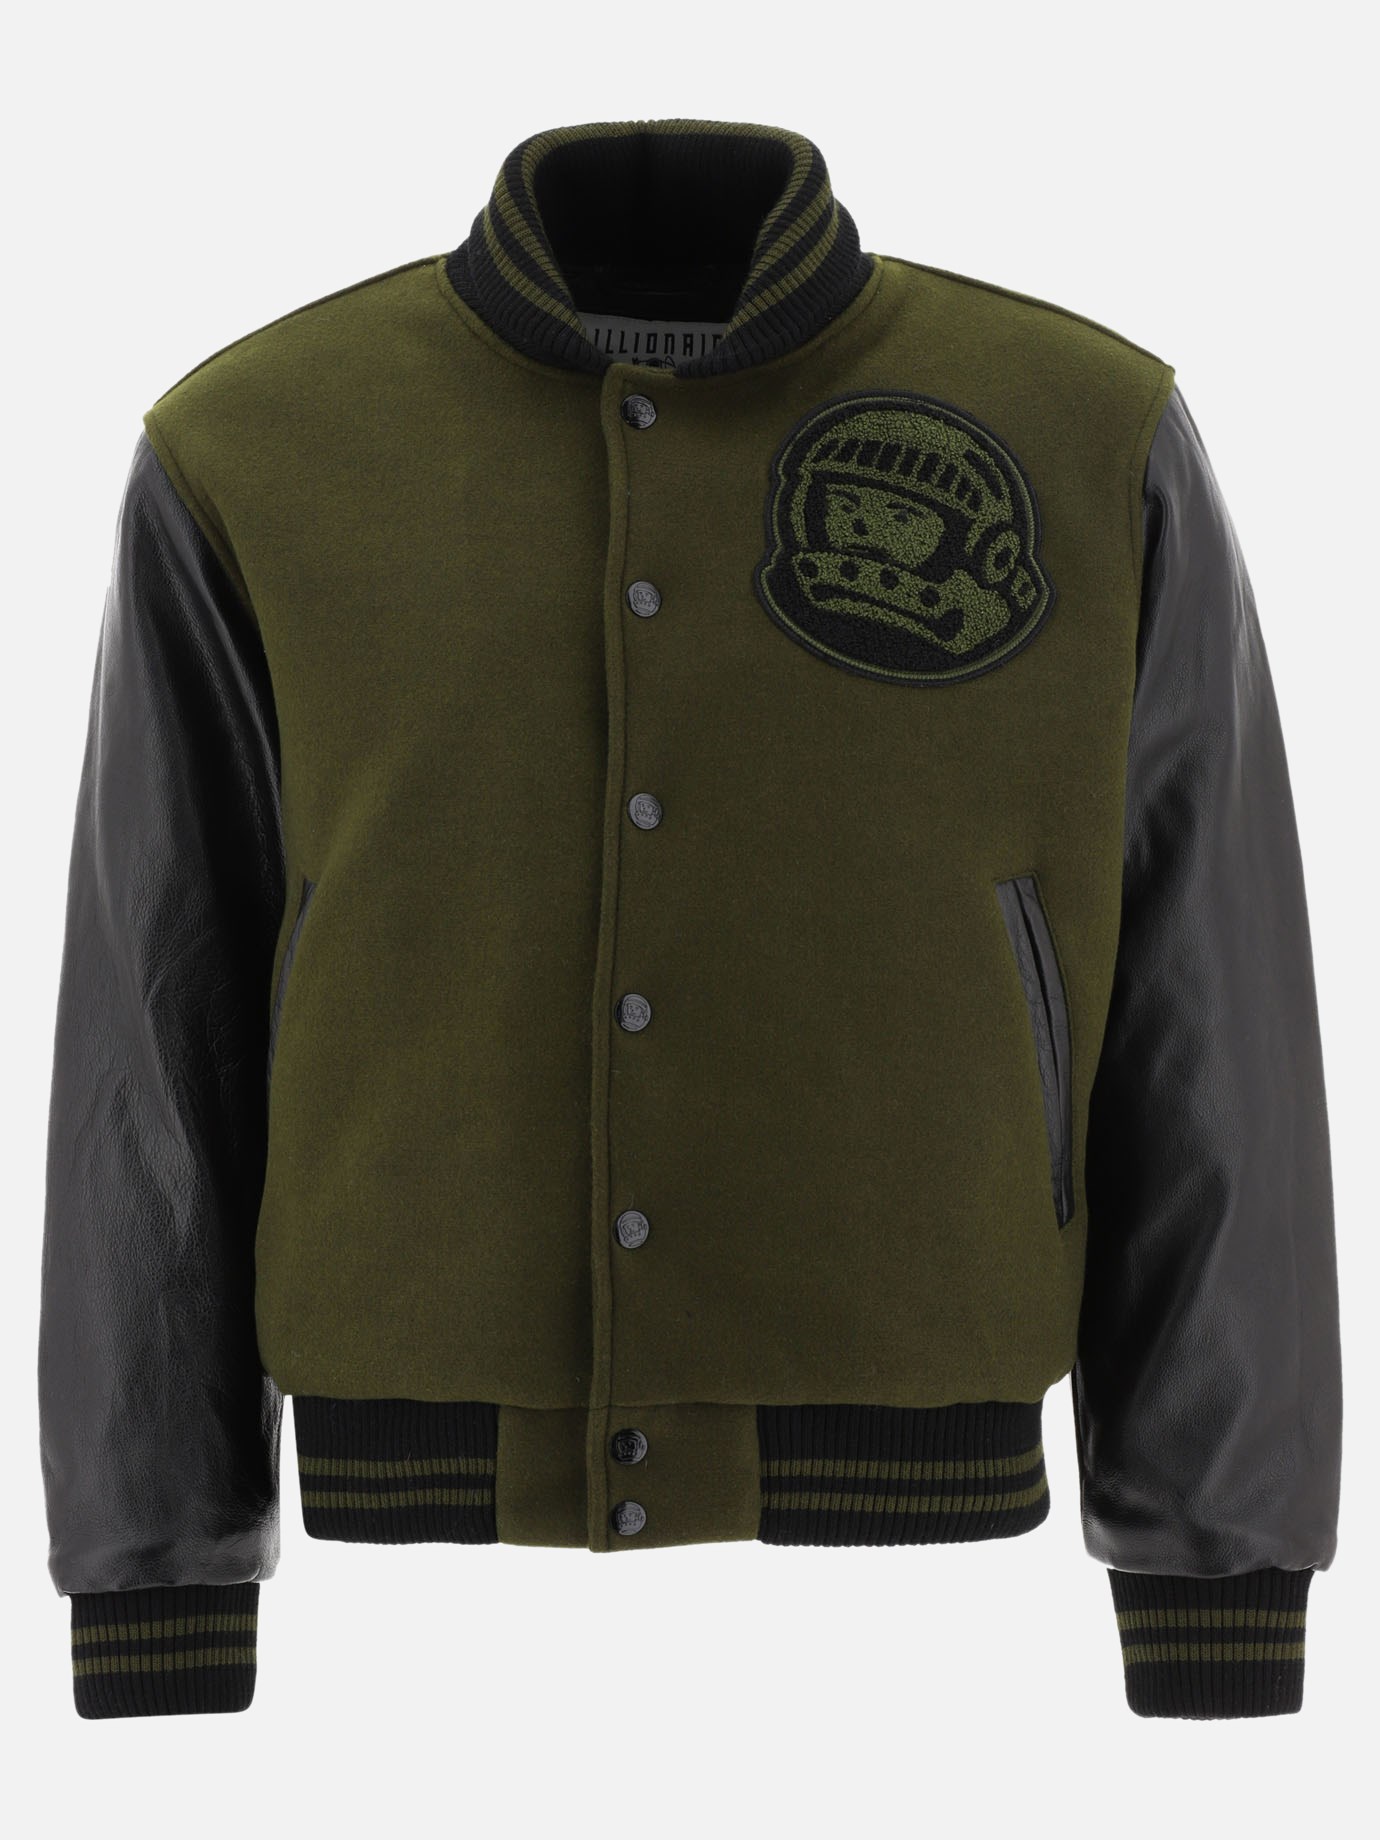  Astro  bomber jacket by Billionaire Boys Club